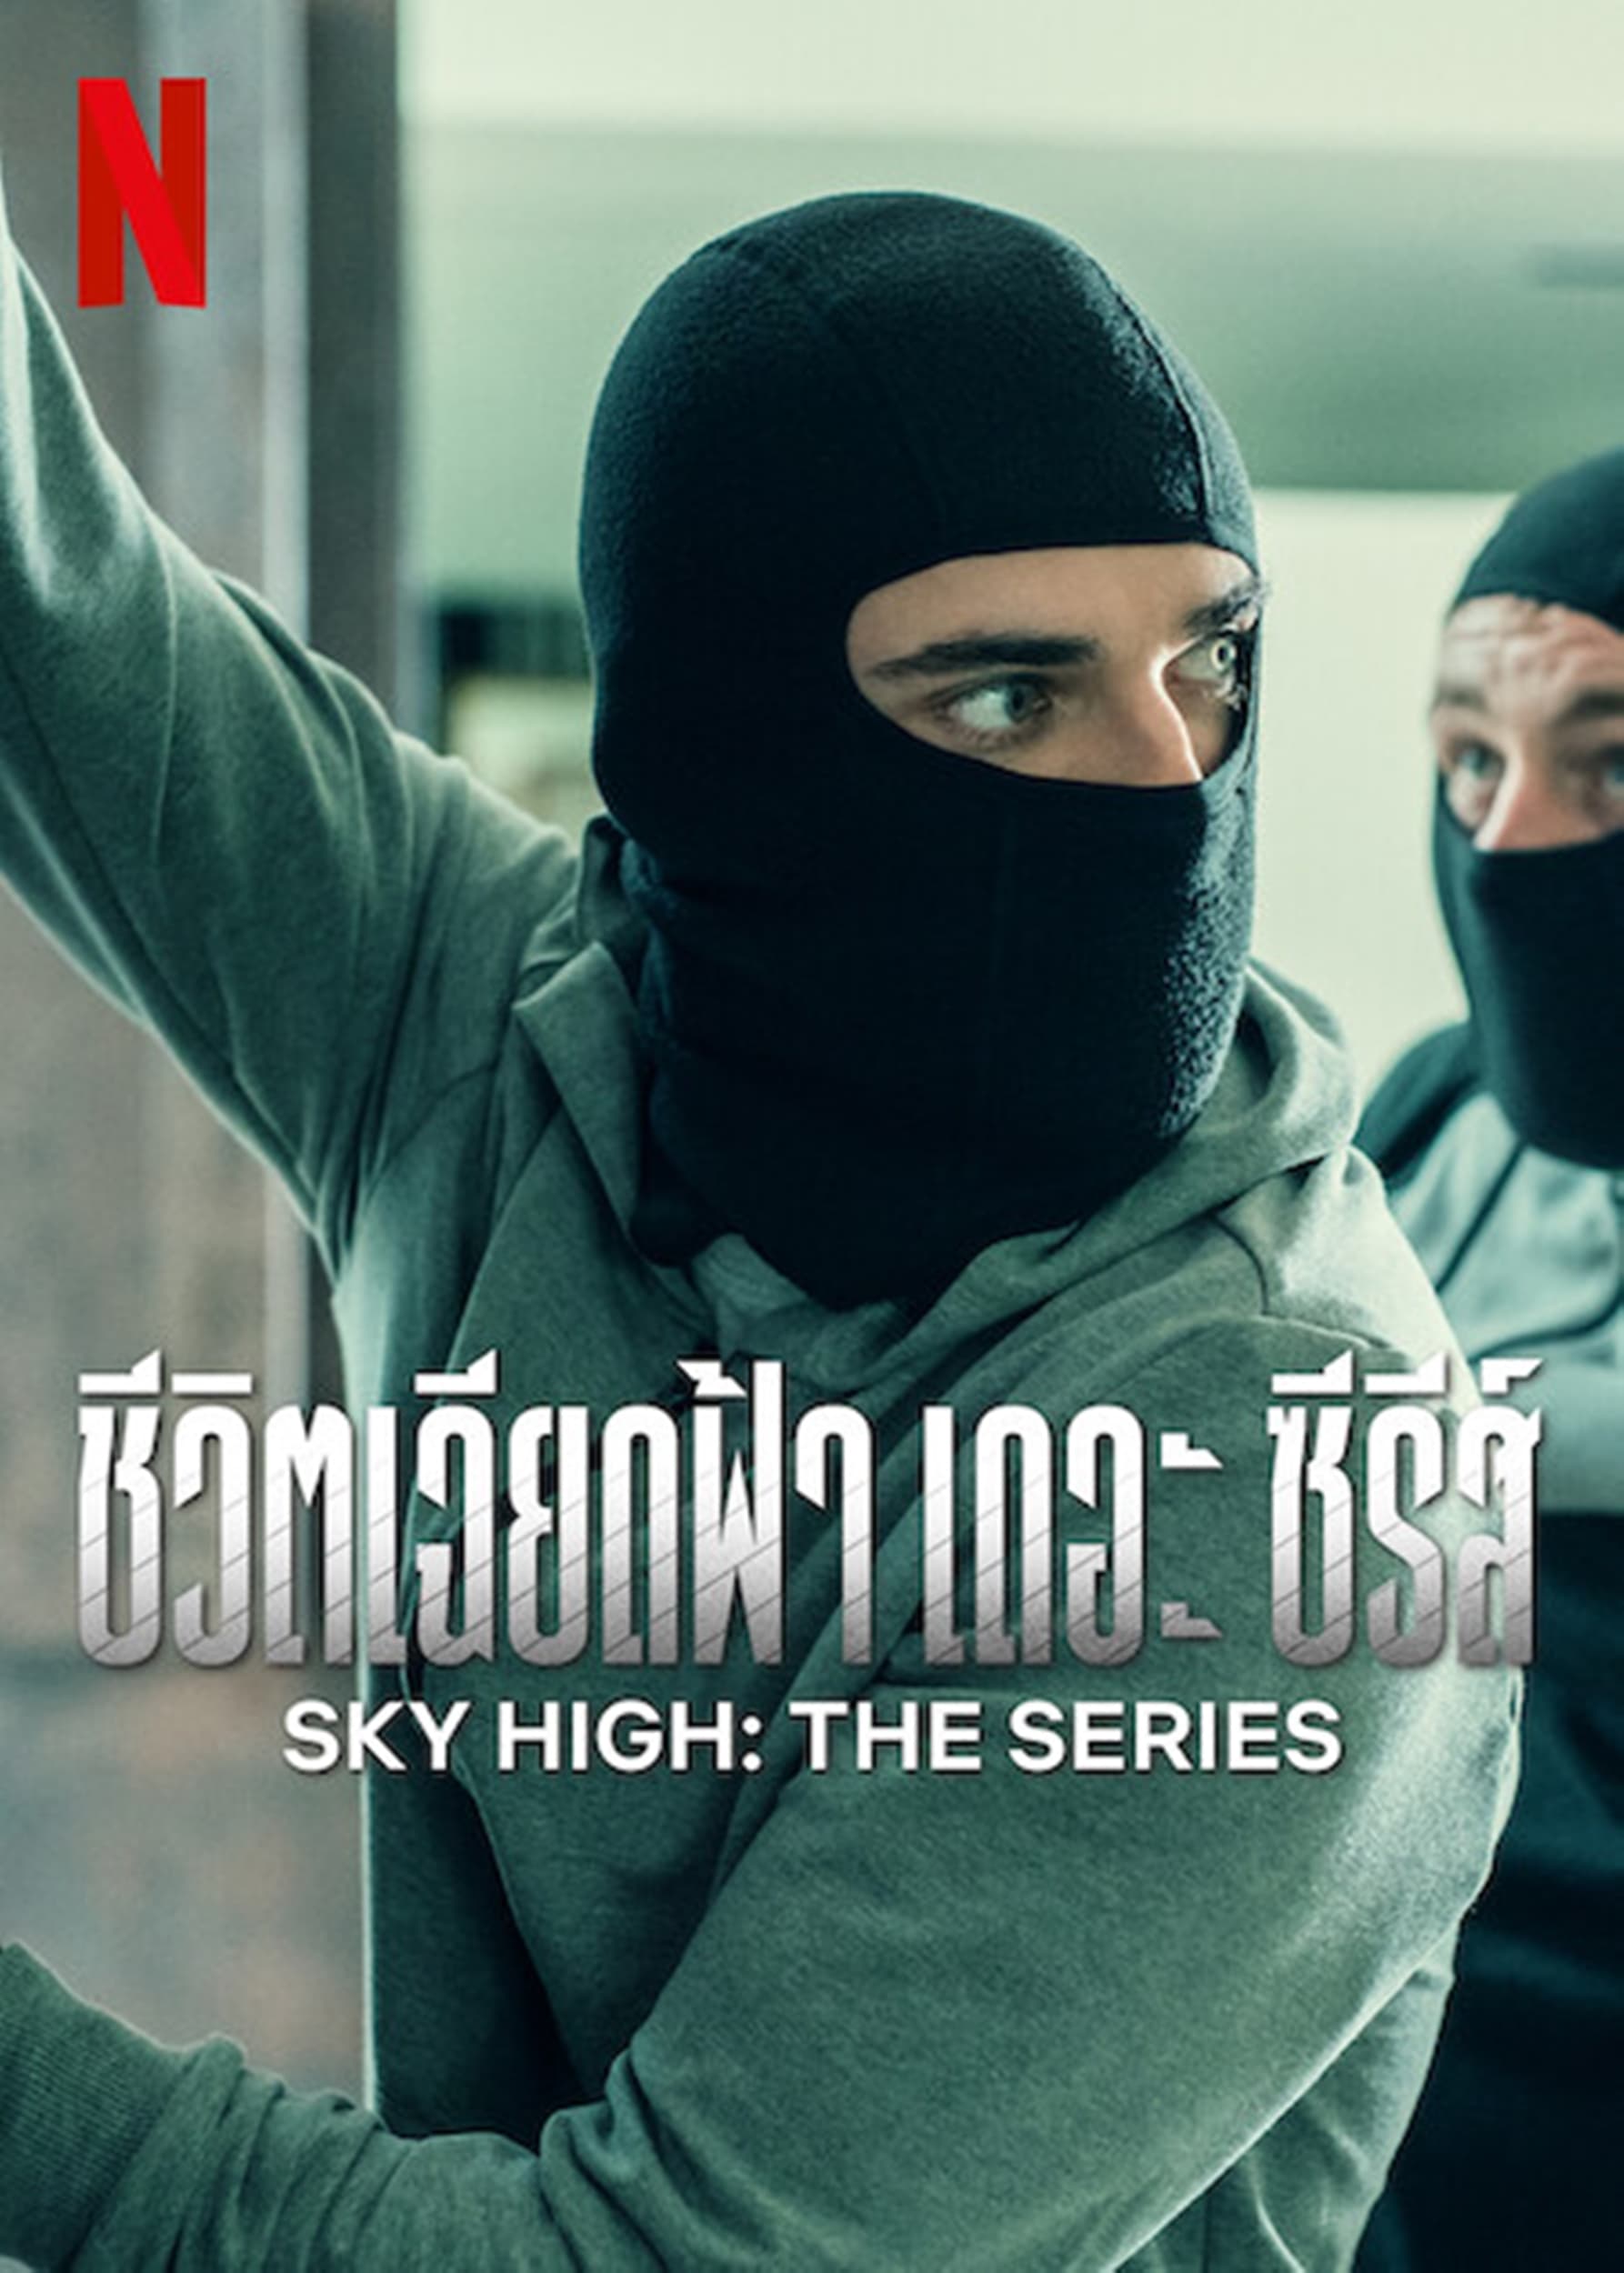 Sky High: The Series ชีวิตเฉียดฟ้า เดอะ ซีรีส์